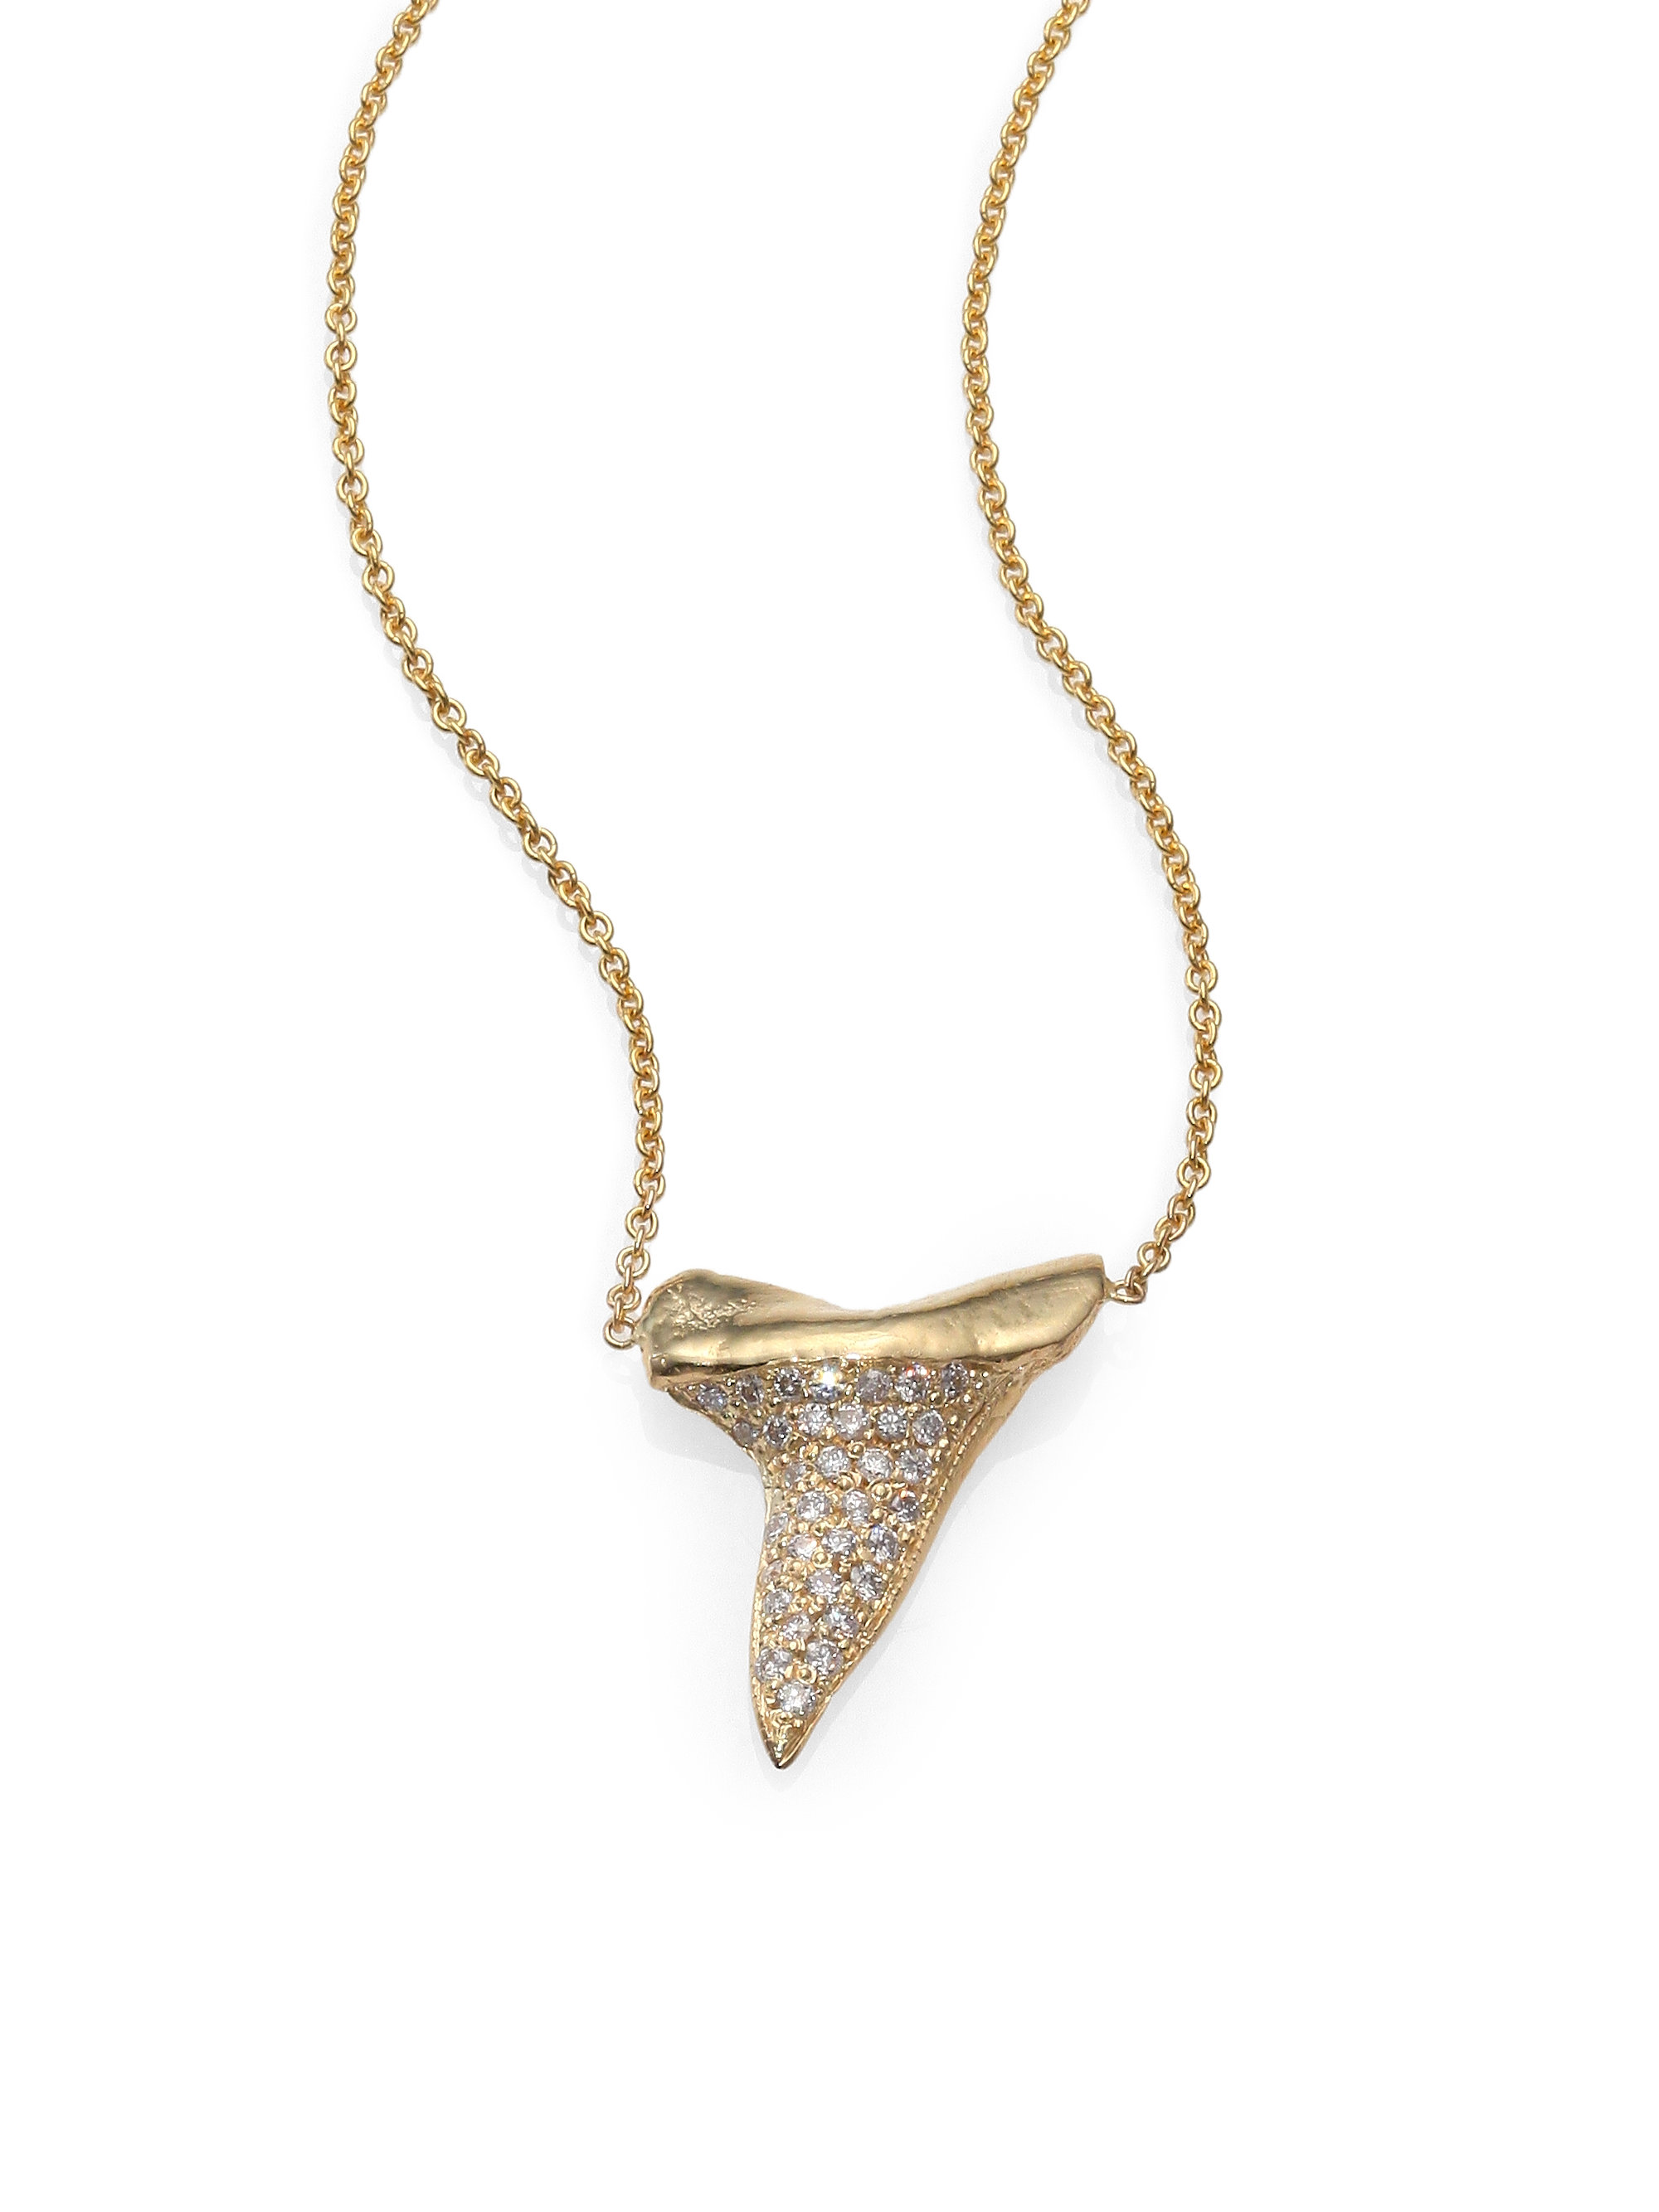 Lyst - Zoe chicco Diamond & 14K Yellow Gold Shark Tooth Pendant